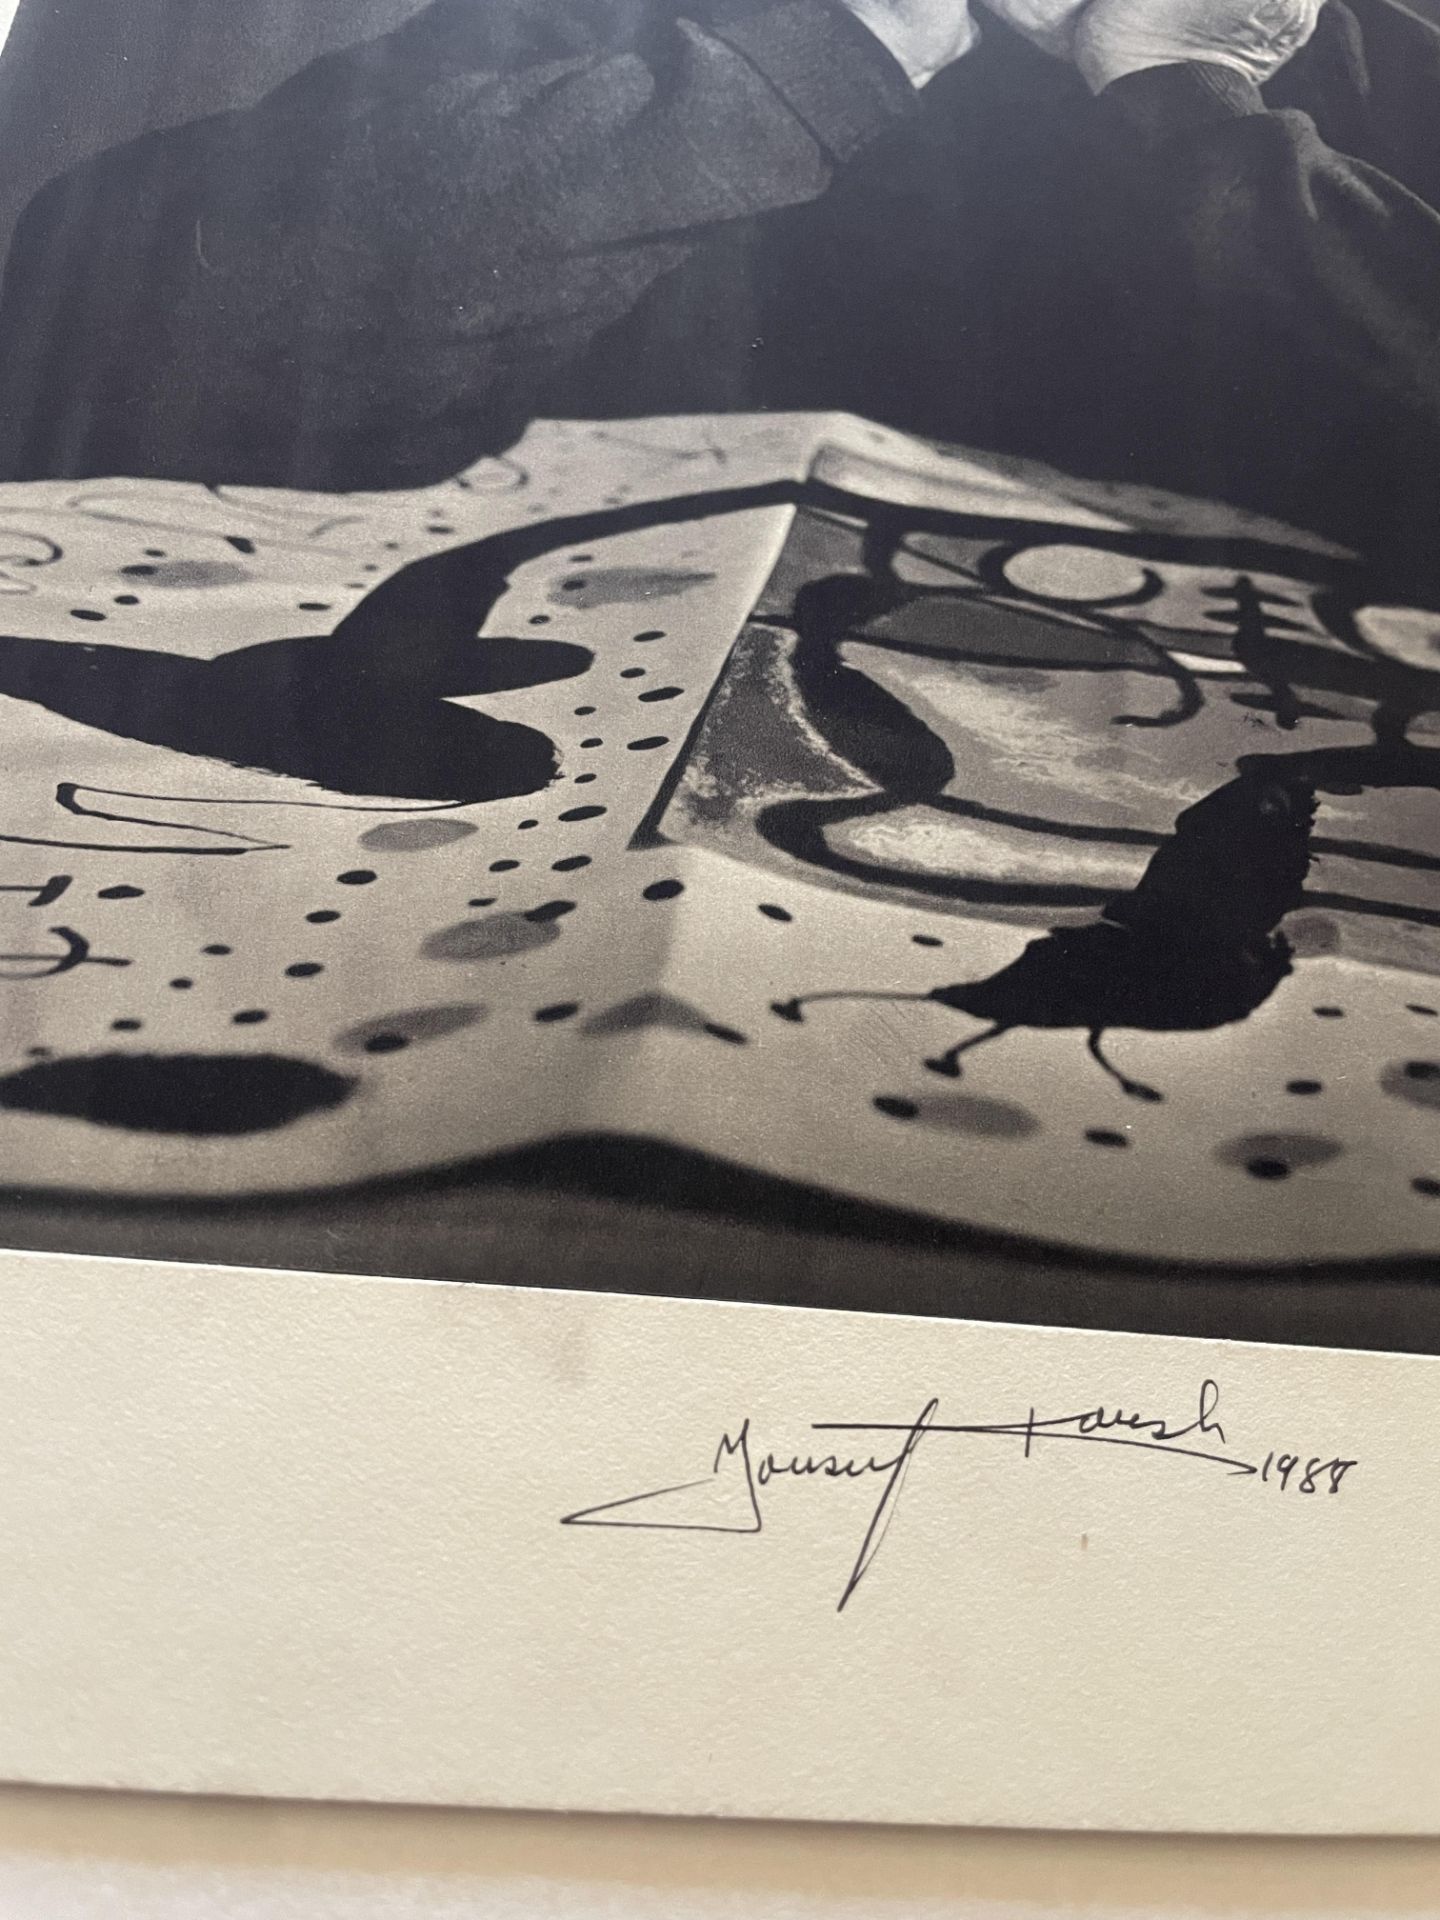 Yousuf Karsh Signed "Joan Miro" Print - Image 4 of 5